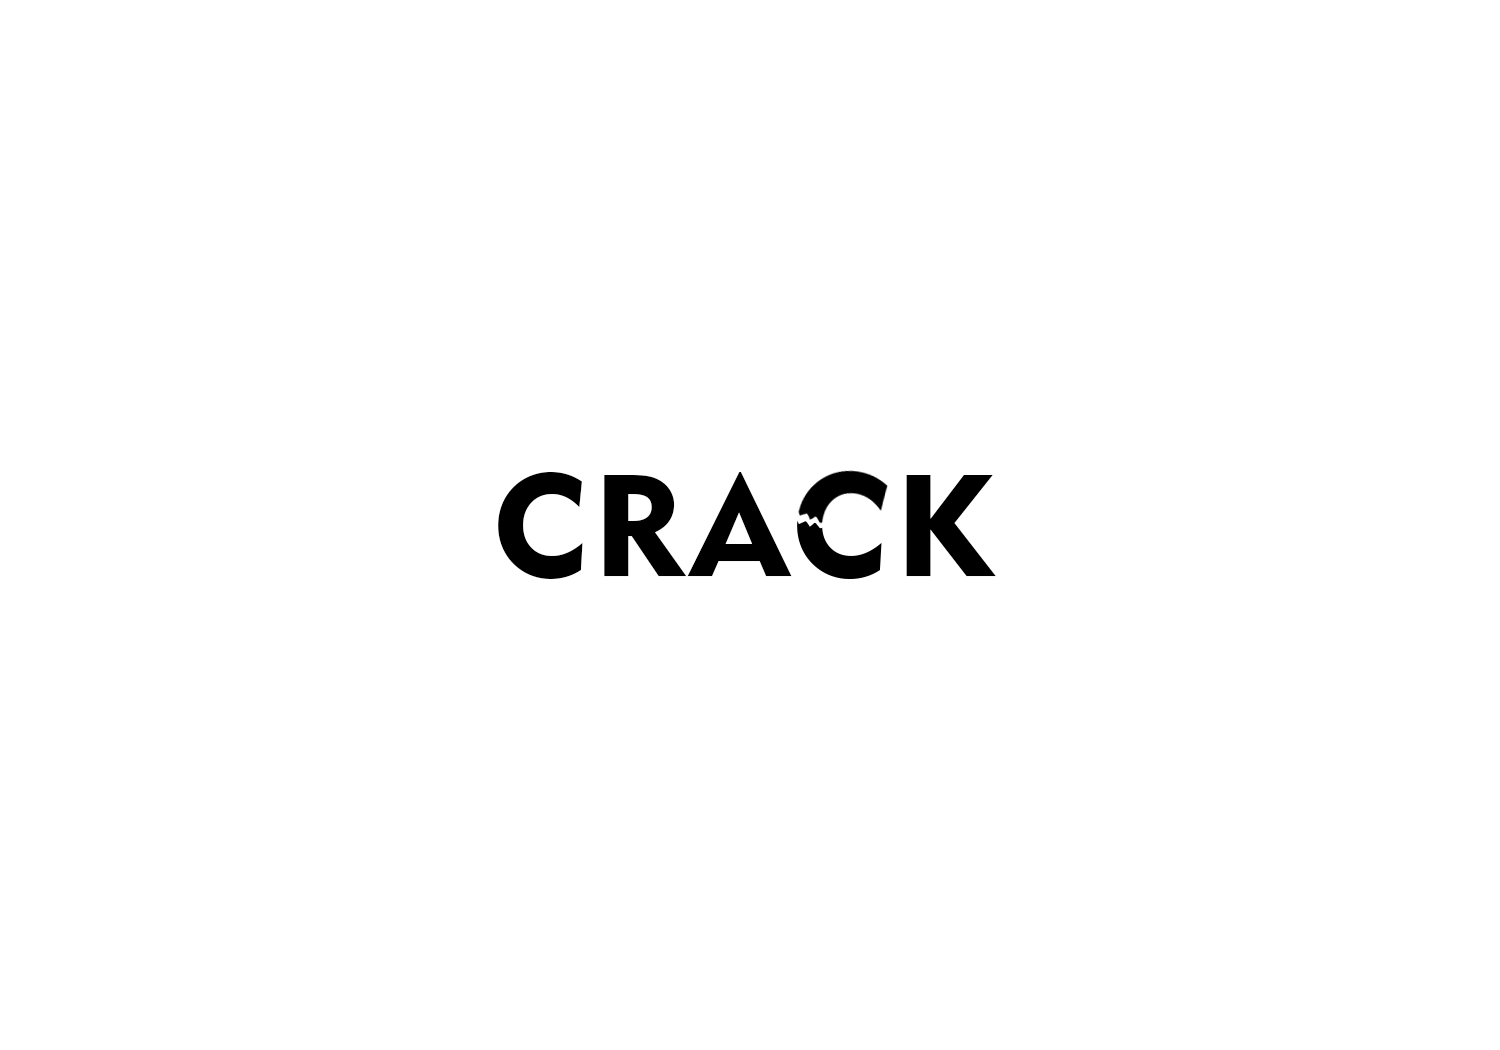 Crack Logo - Creative Designs Idea Free. Creative Ideas For Designers